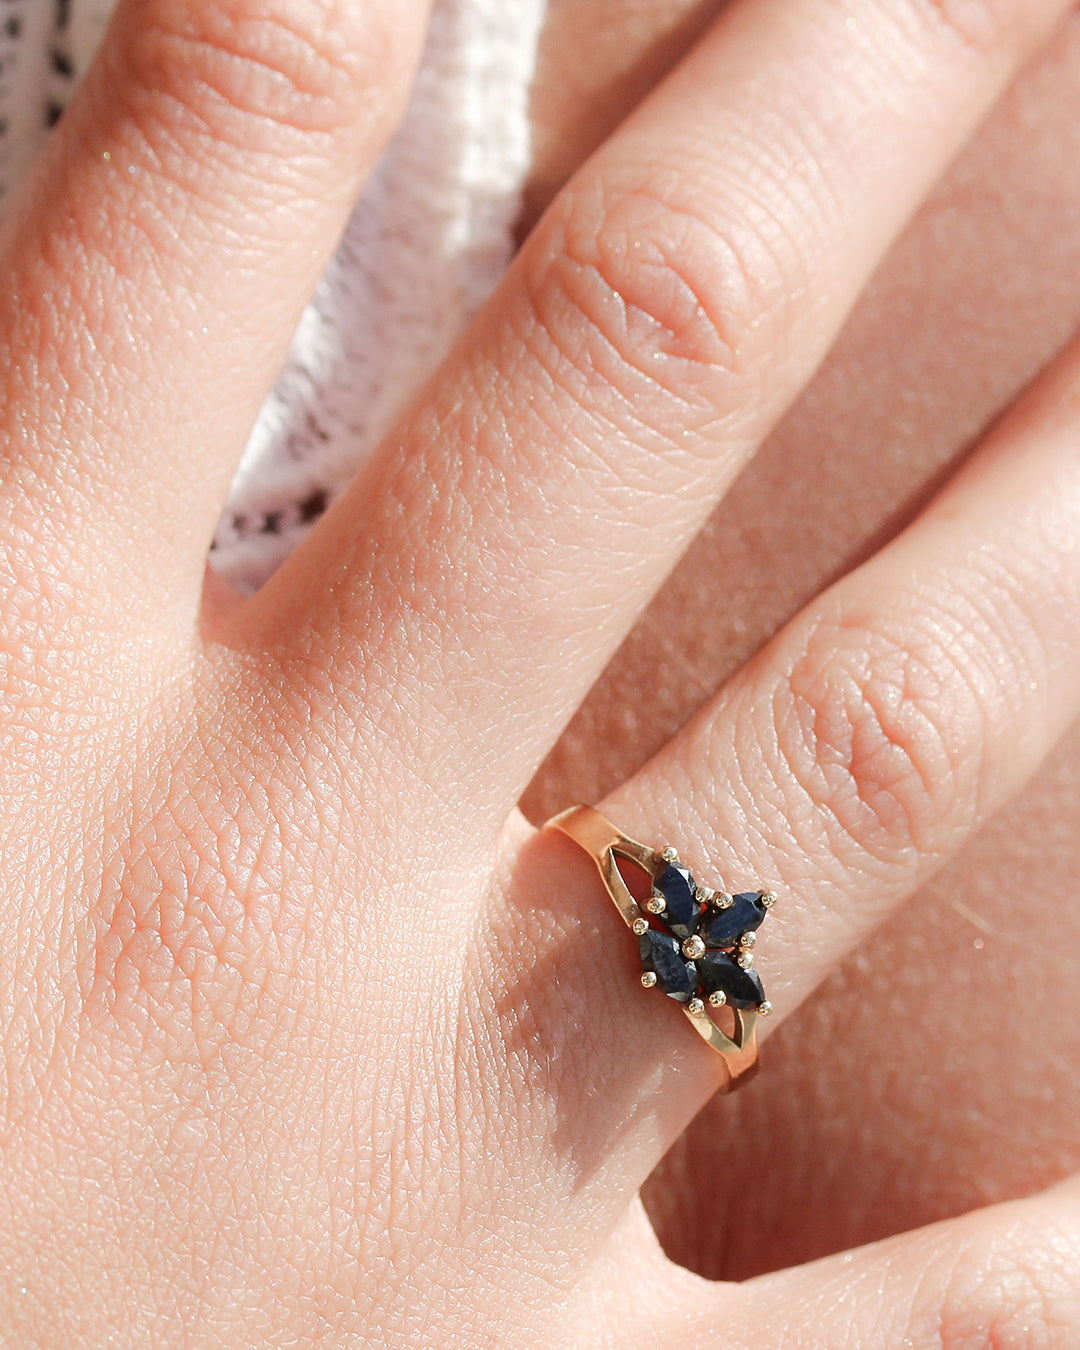 Black Iris Ring with Marquise Cut Black Onyx